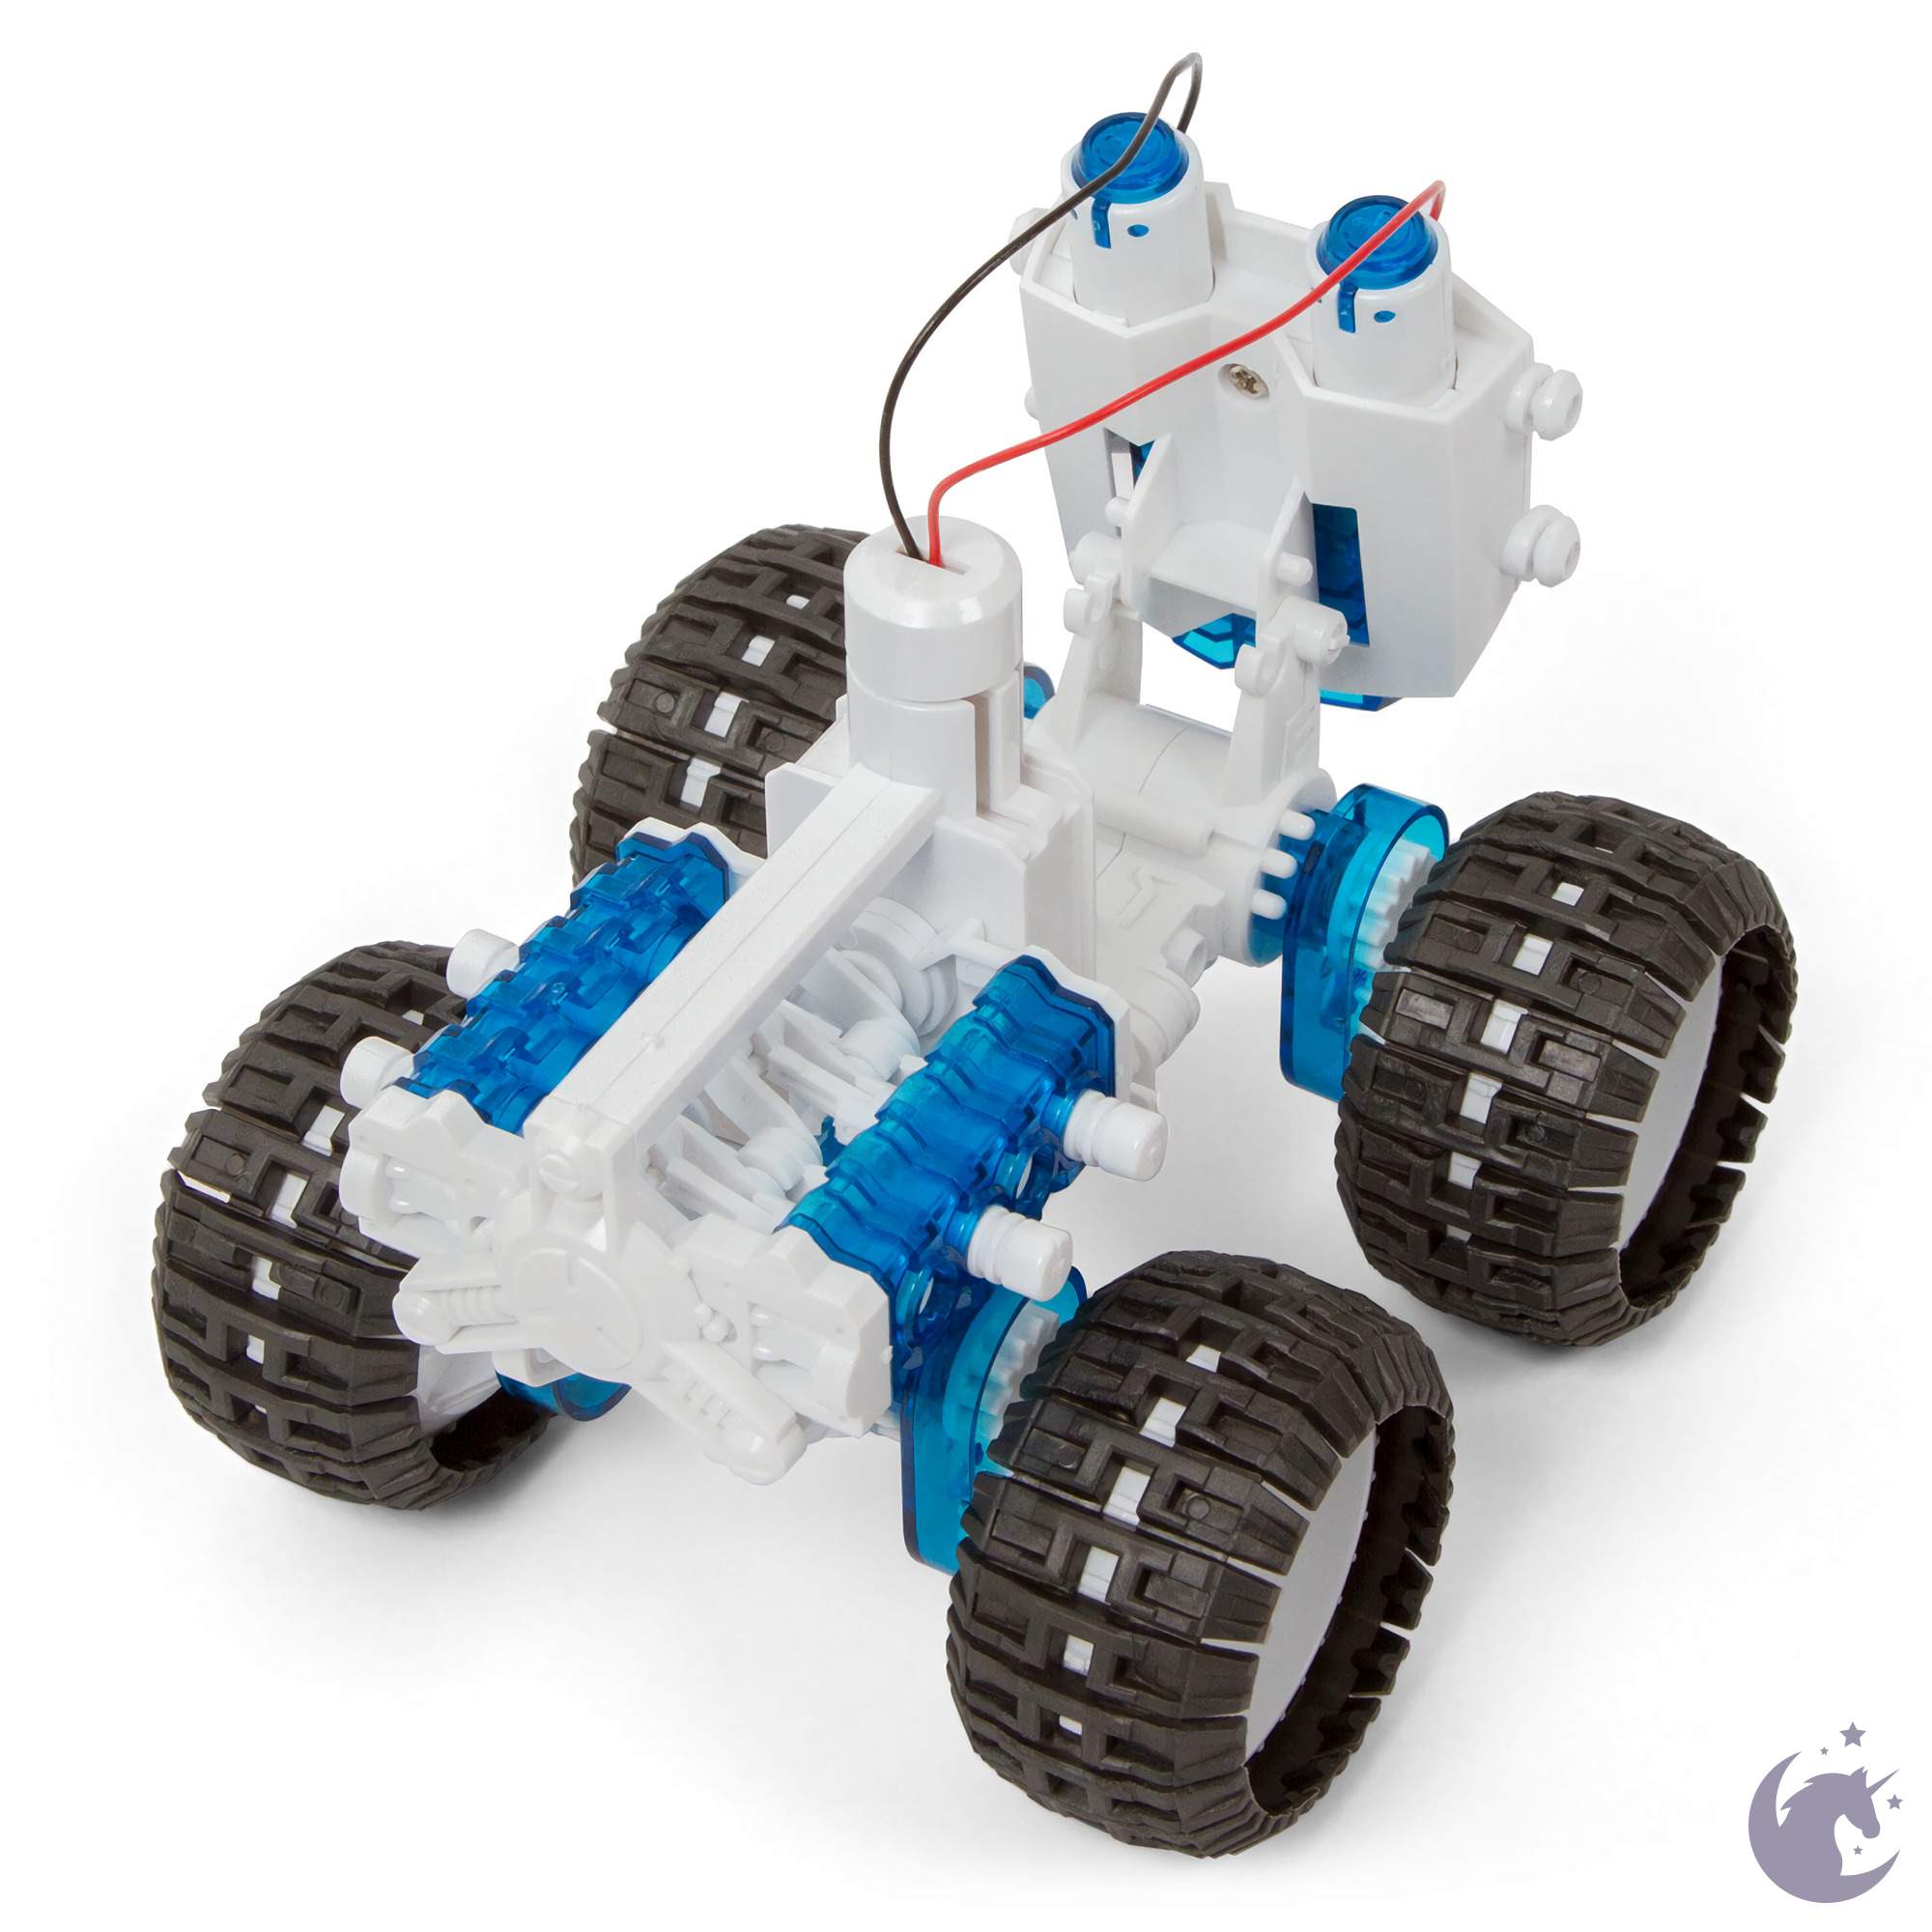 unicorntoys cic kits salt water fuel cell engine car educational robot kit engineering stem toys for kids CIC21-752